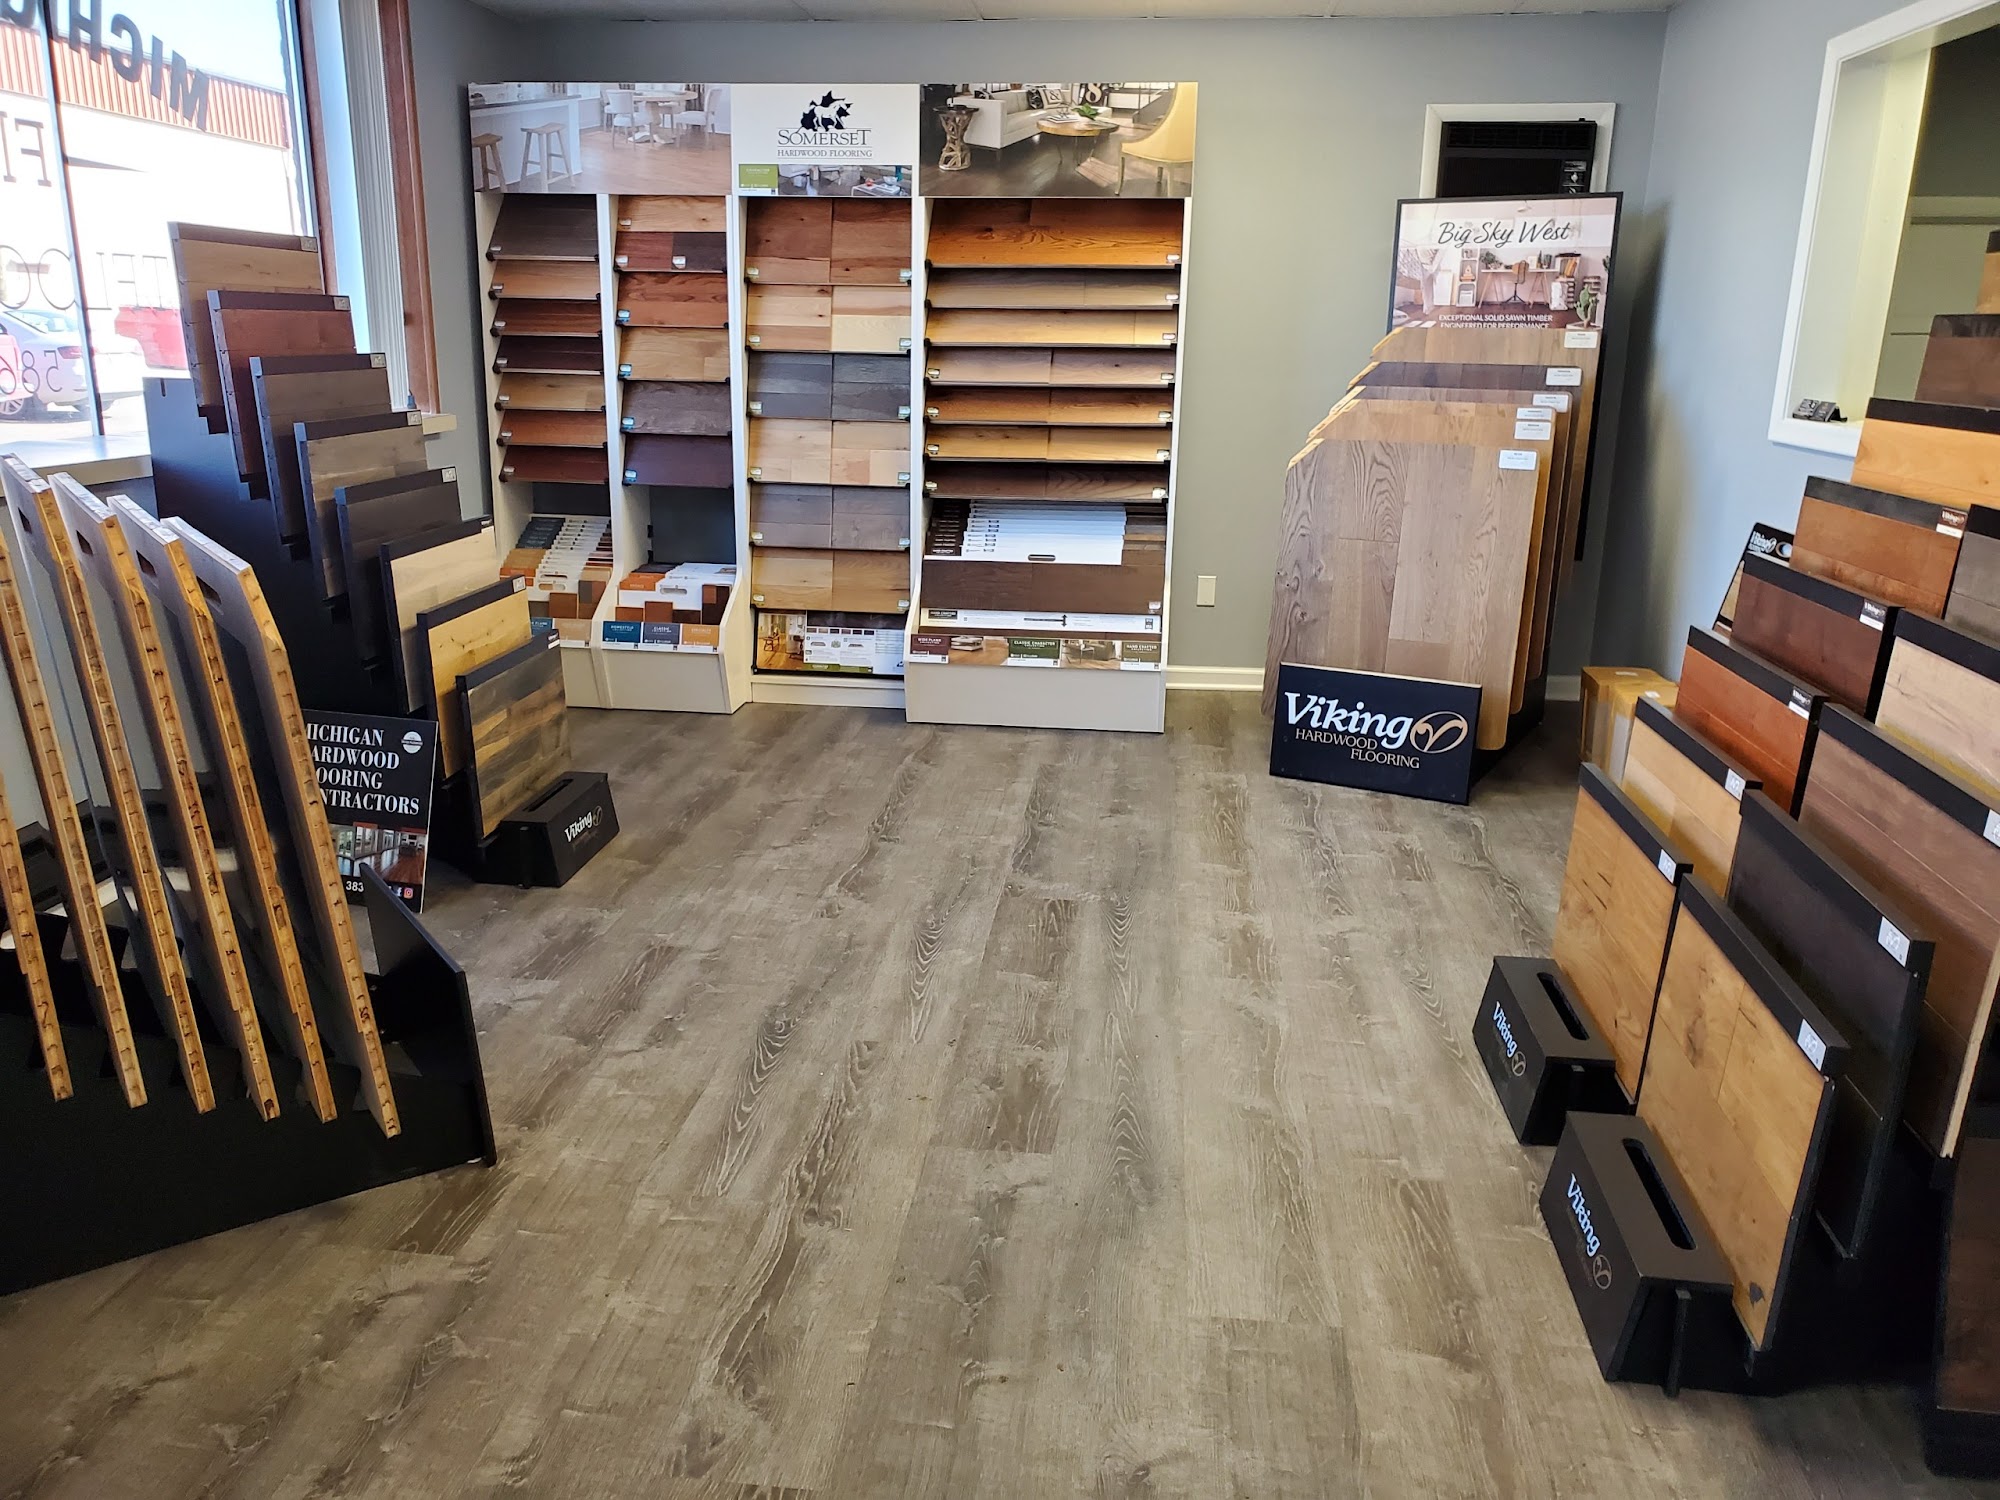 Michigan Hardwood Flooring Company